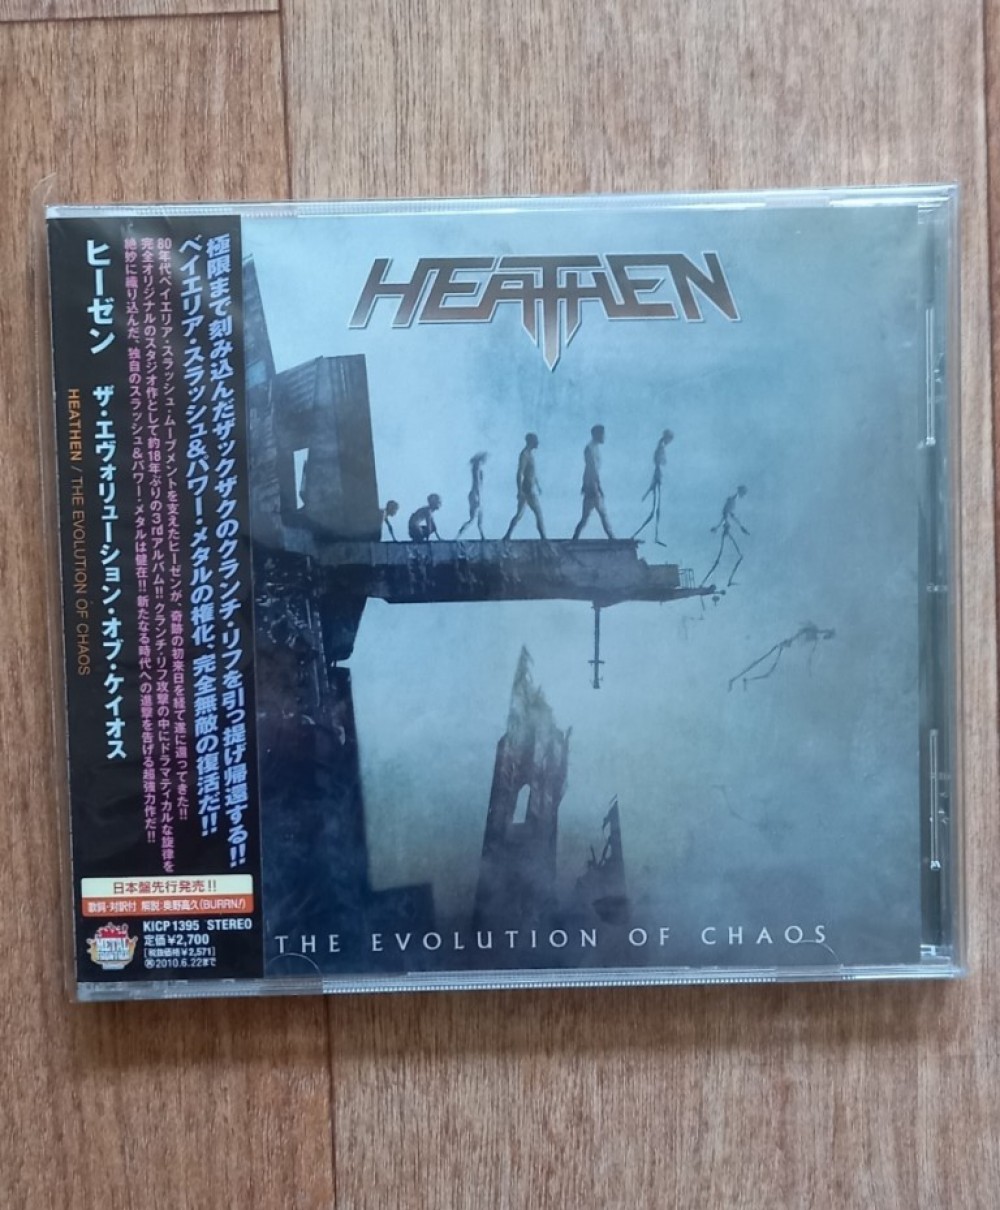 Heathen - The Evolution of Chaos CD Photo